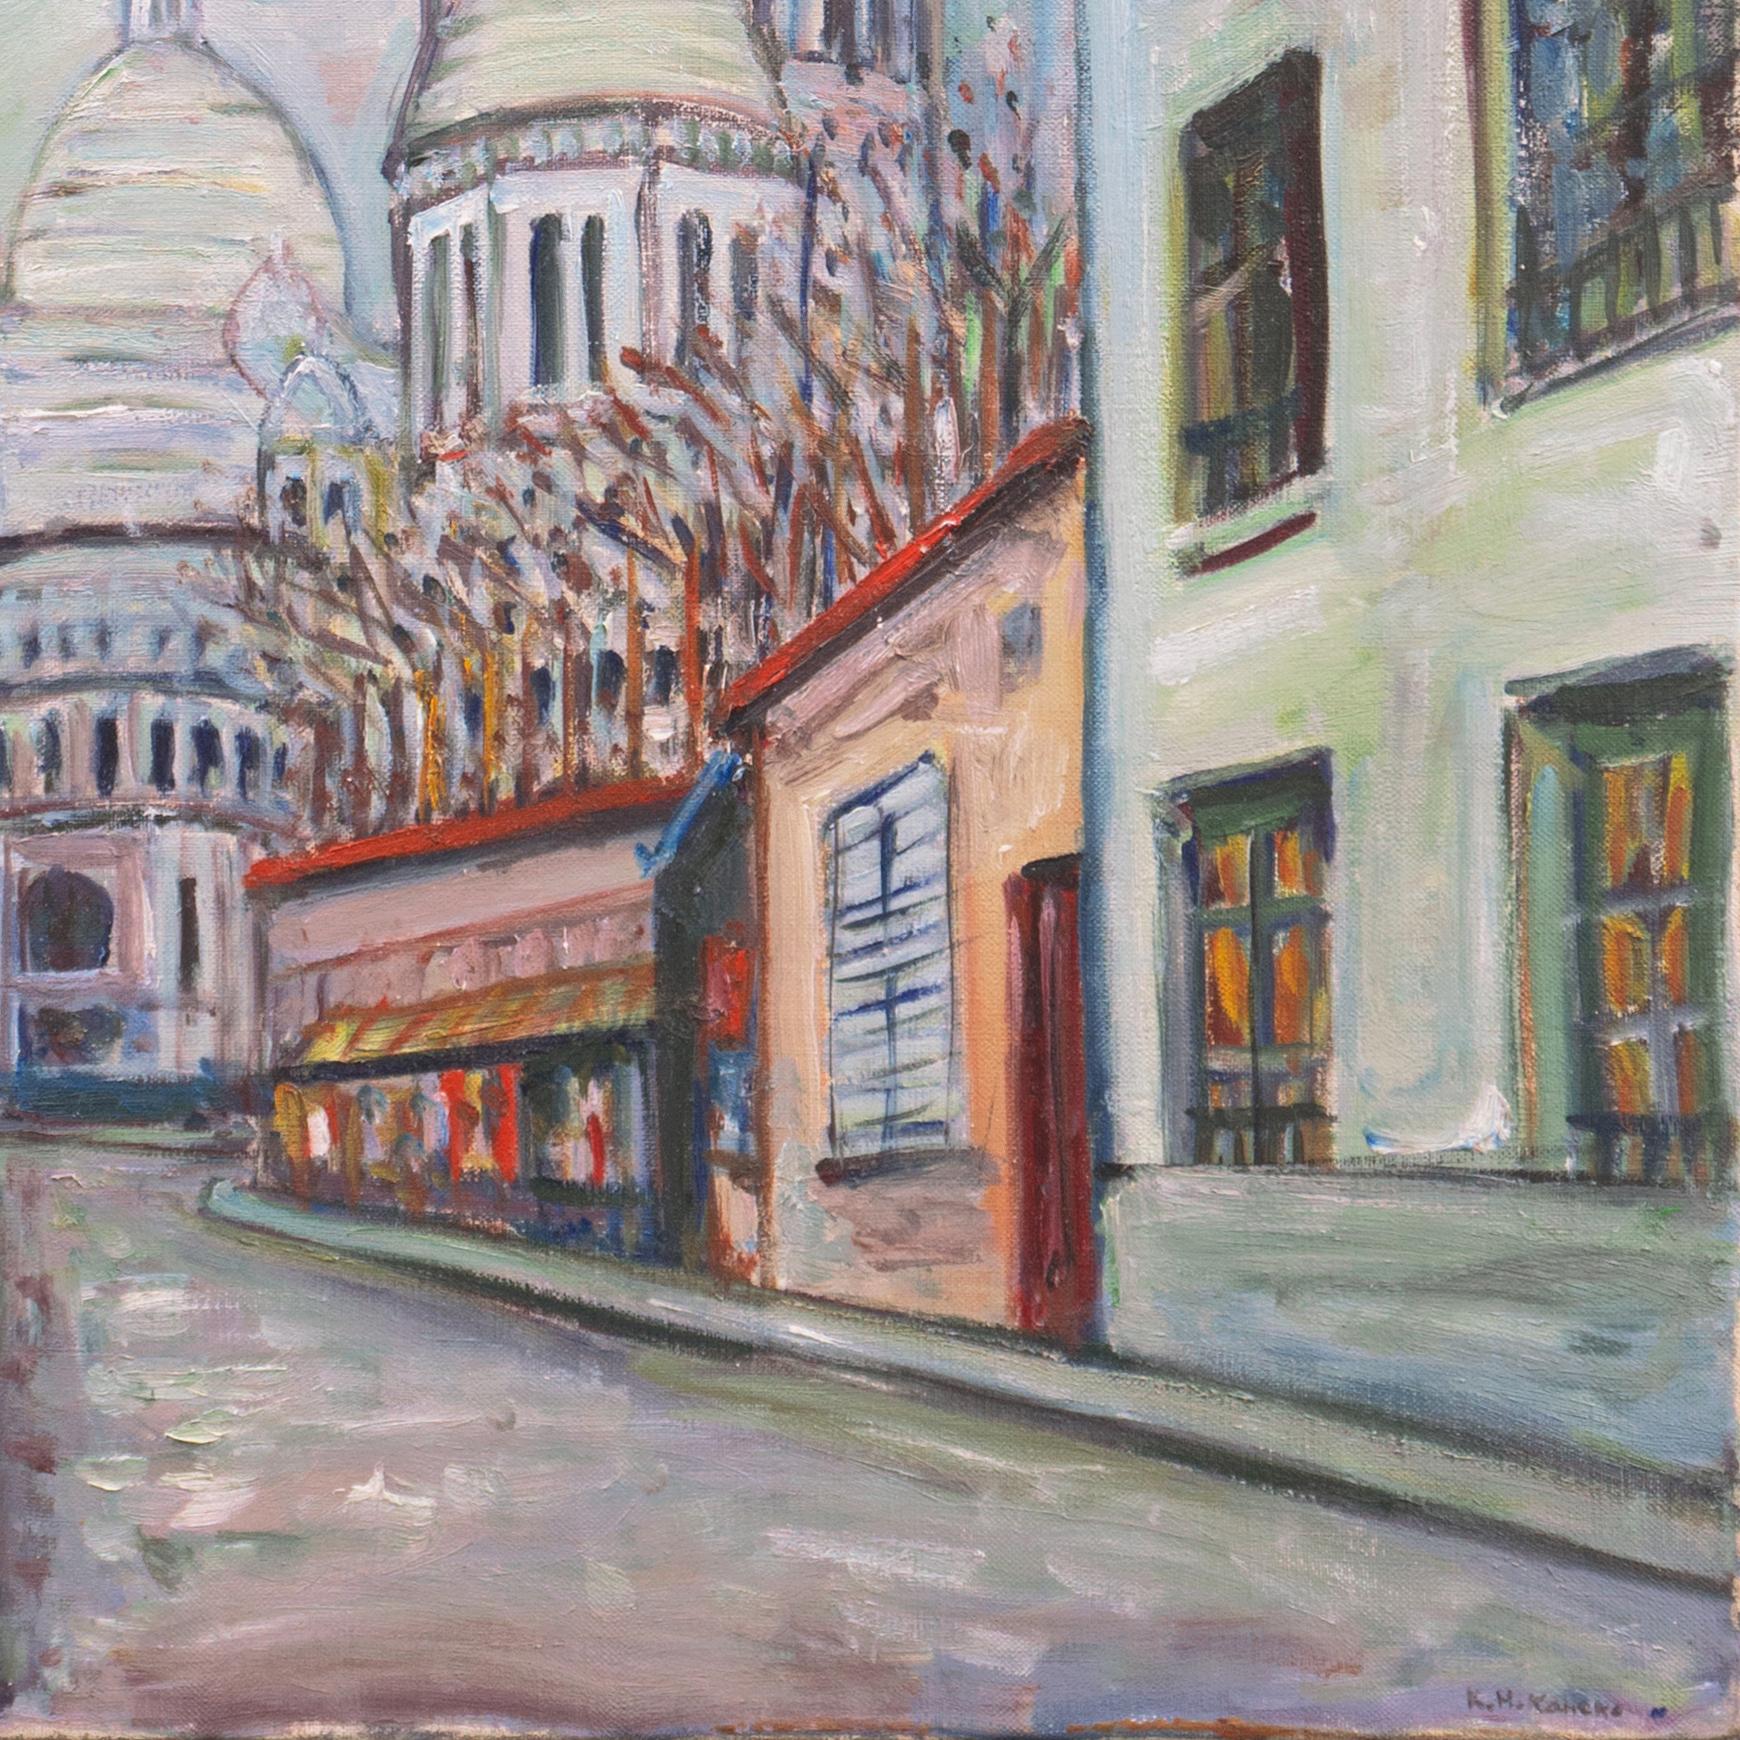 'View of Montmartre with the Basilica of Sacré-Cœur', Paris, Post Impressionism - Modern Painting by K.H. Kaneko